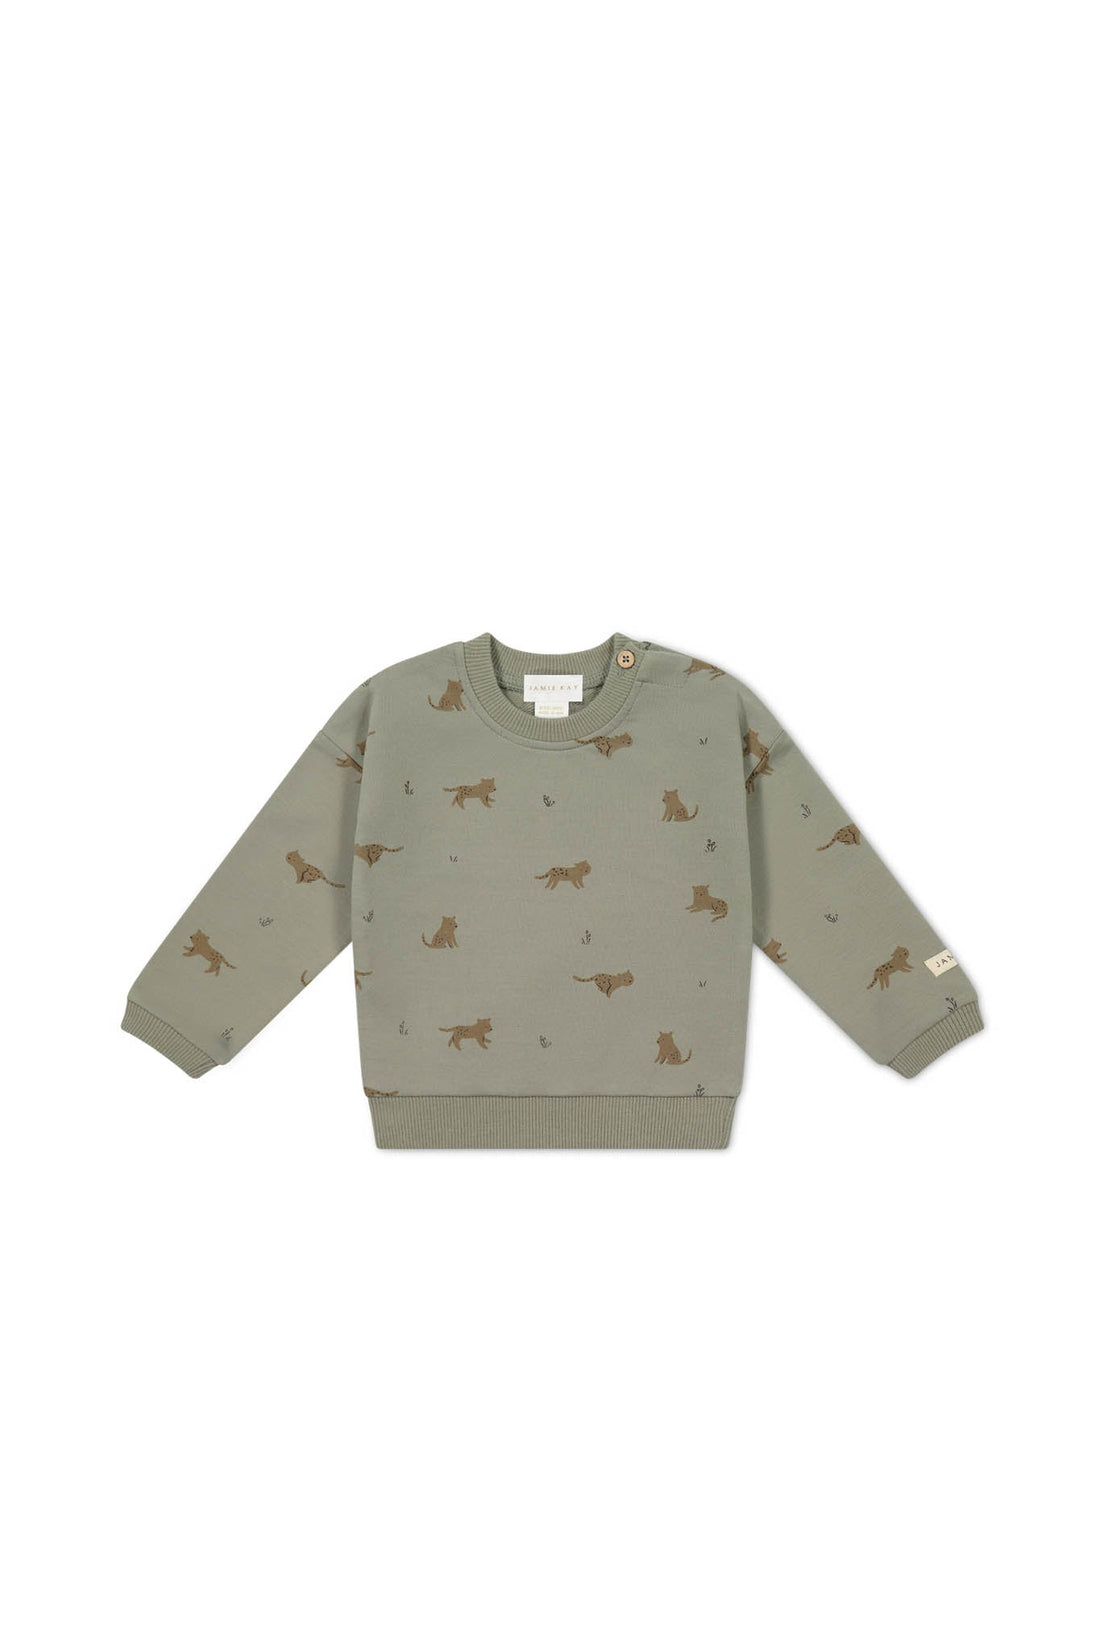 Organic Cotton Damien Sweatshirt - Lenny Leopard Sage Childrens Sweatshirt from Jamie Kay USA